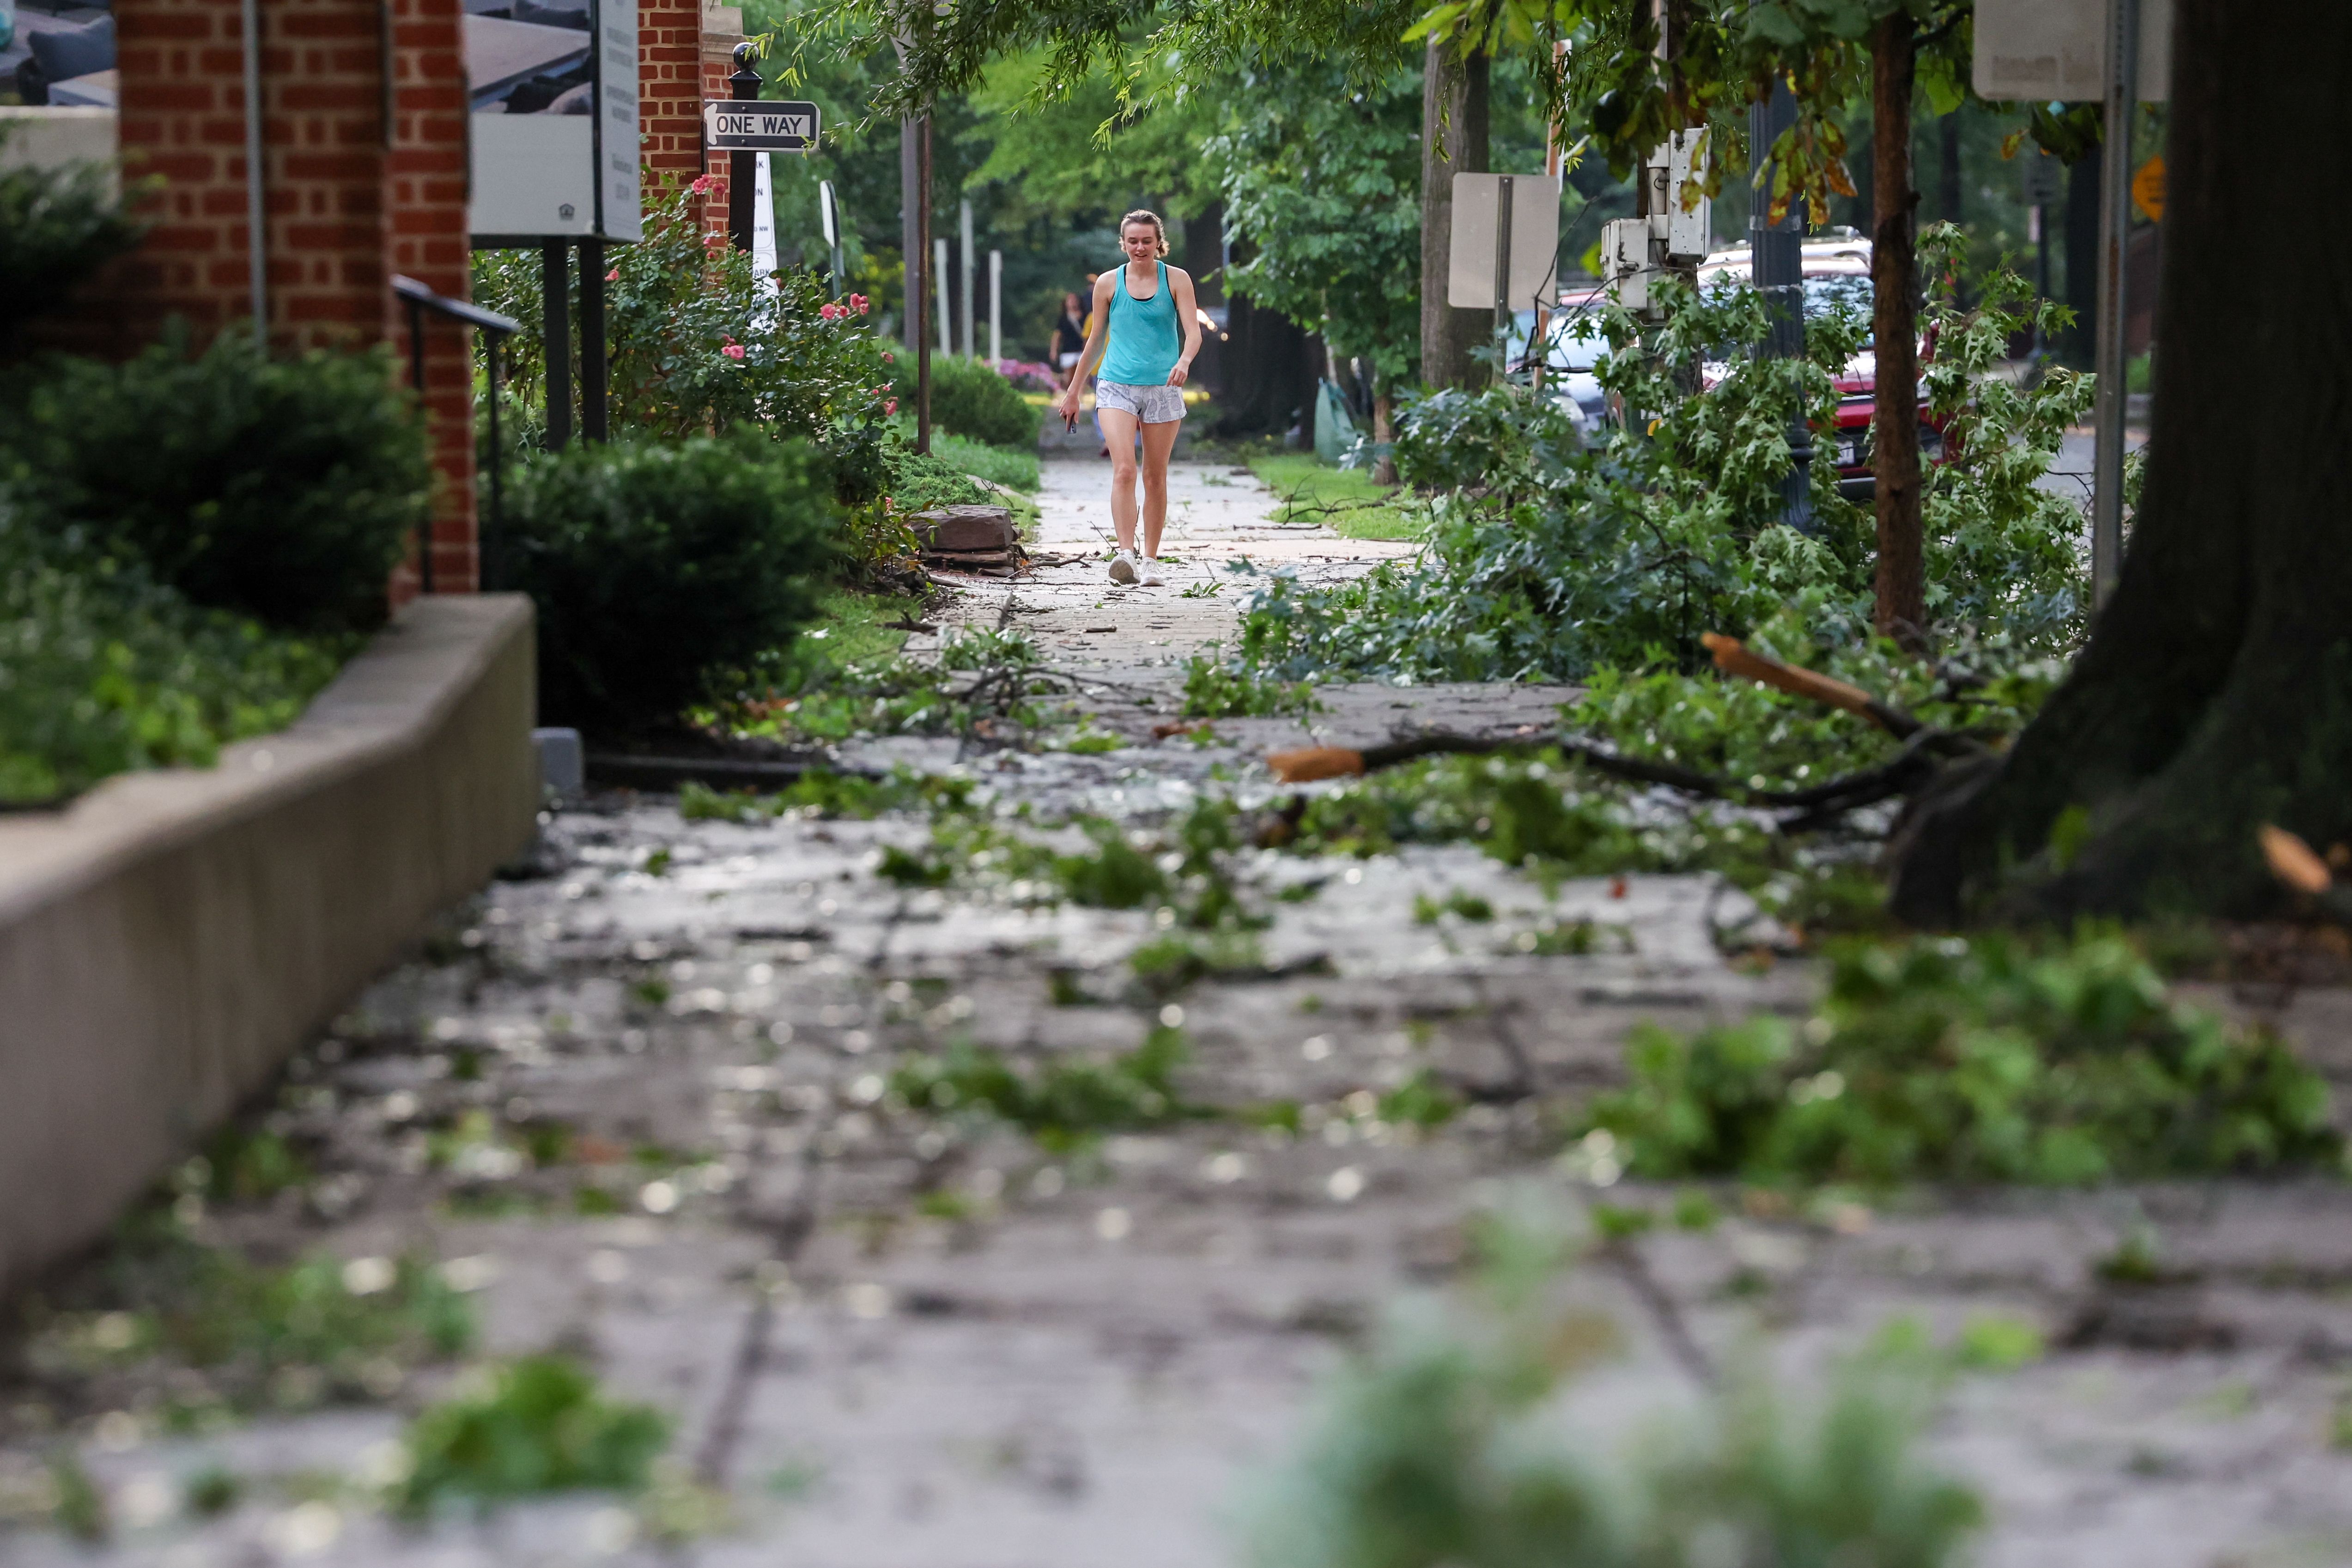 A woman walks on a sidewalk filled with tree debris.